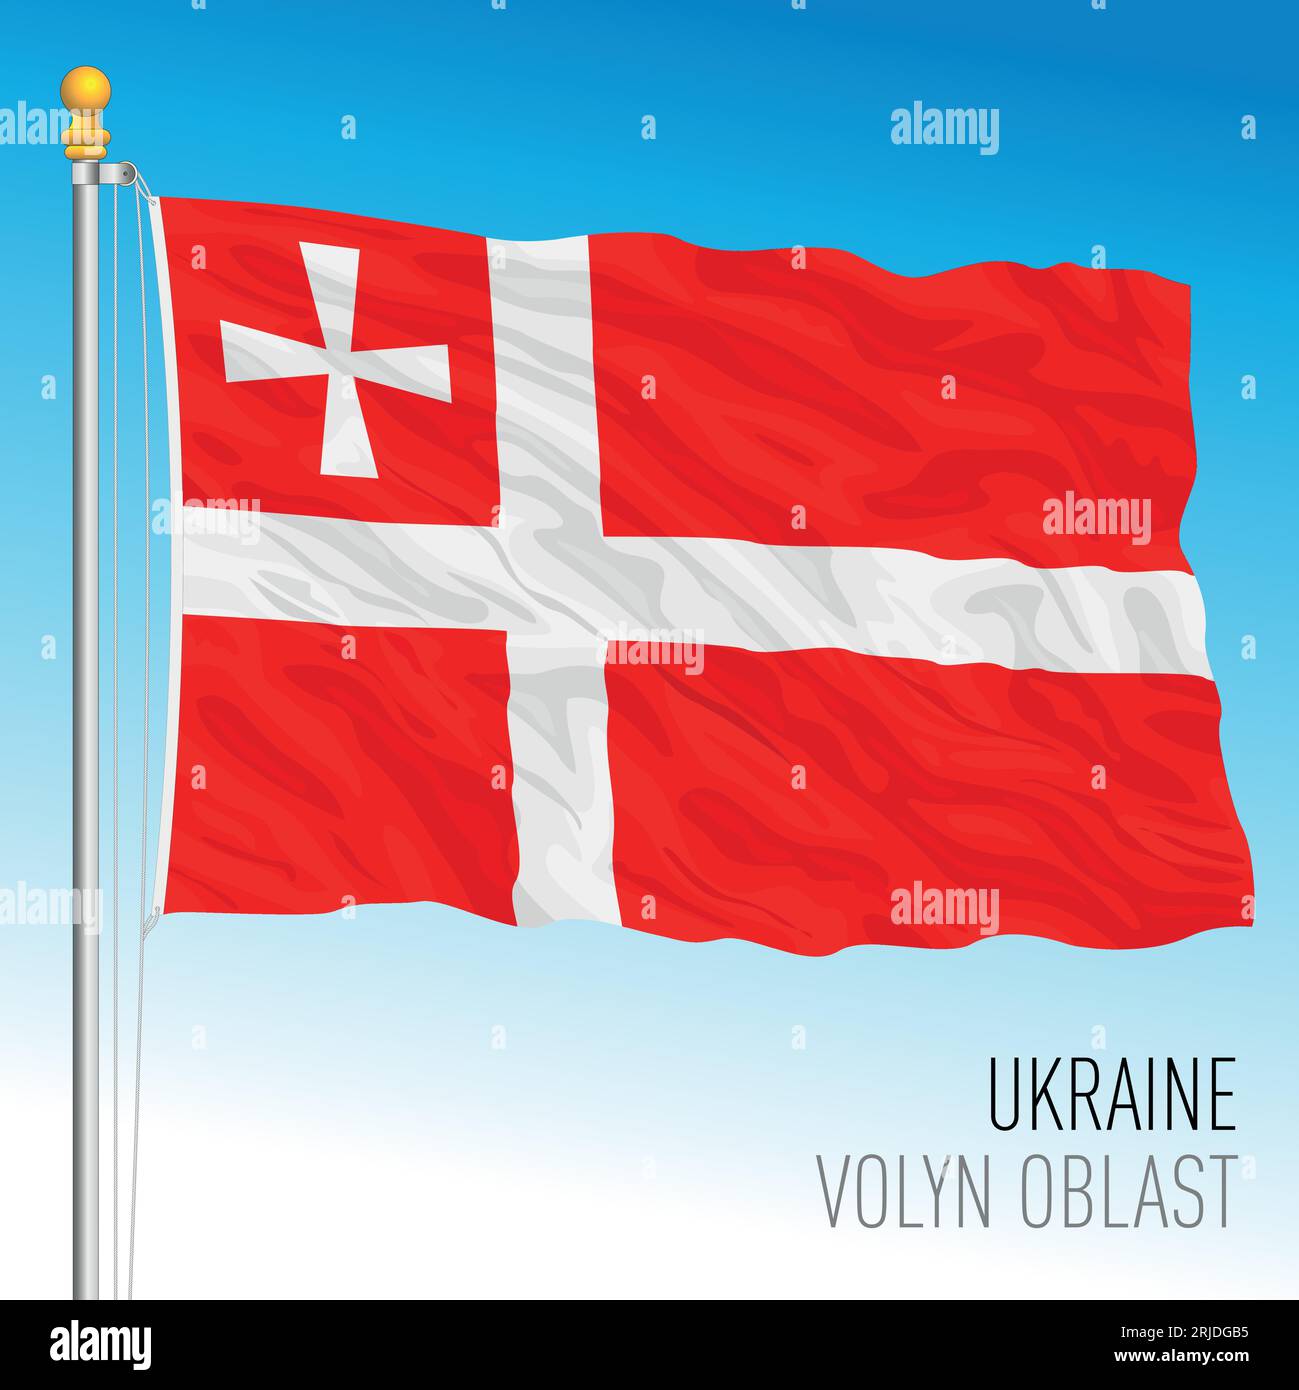 Ukraine, Volyn Oblast waving flag, europe, vector illustration Stock Vector